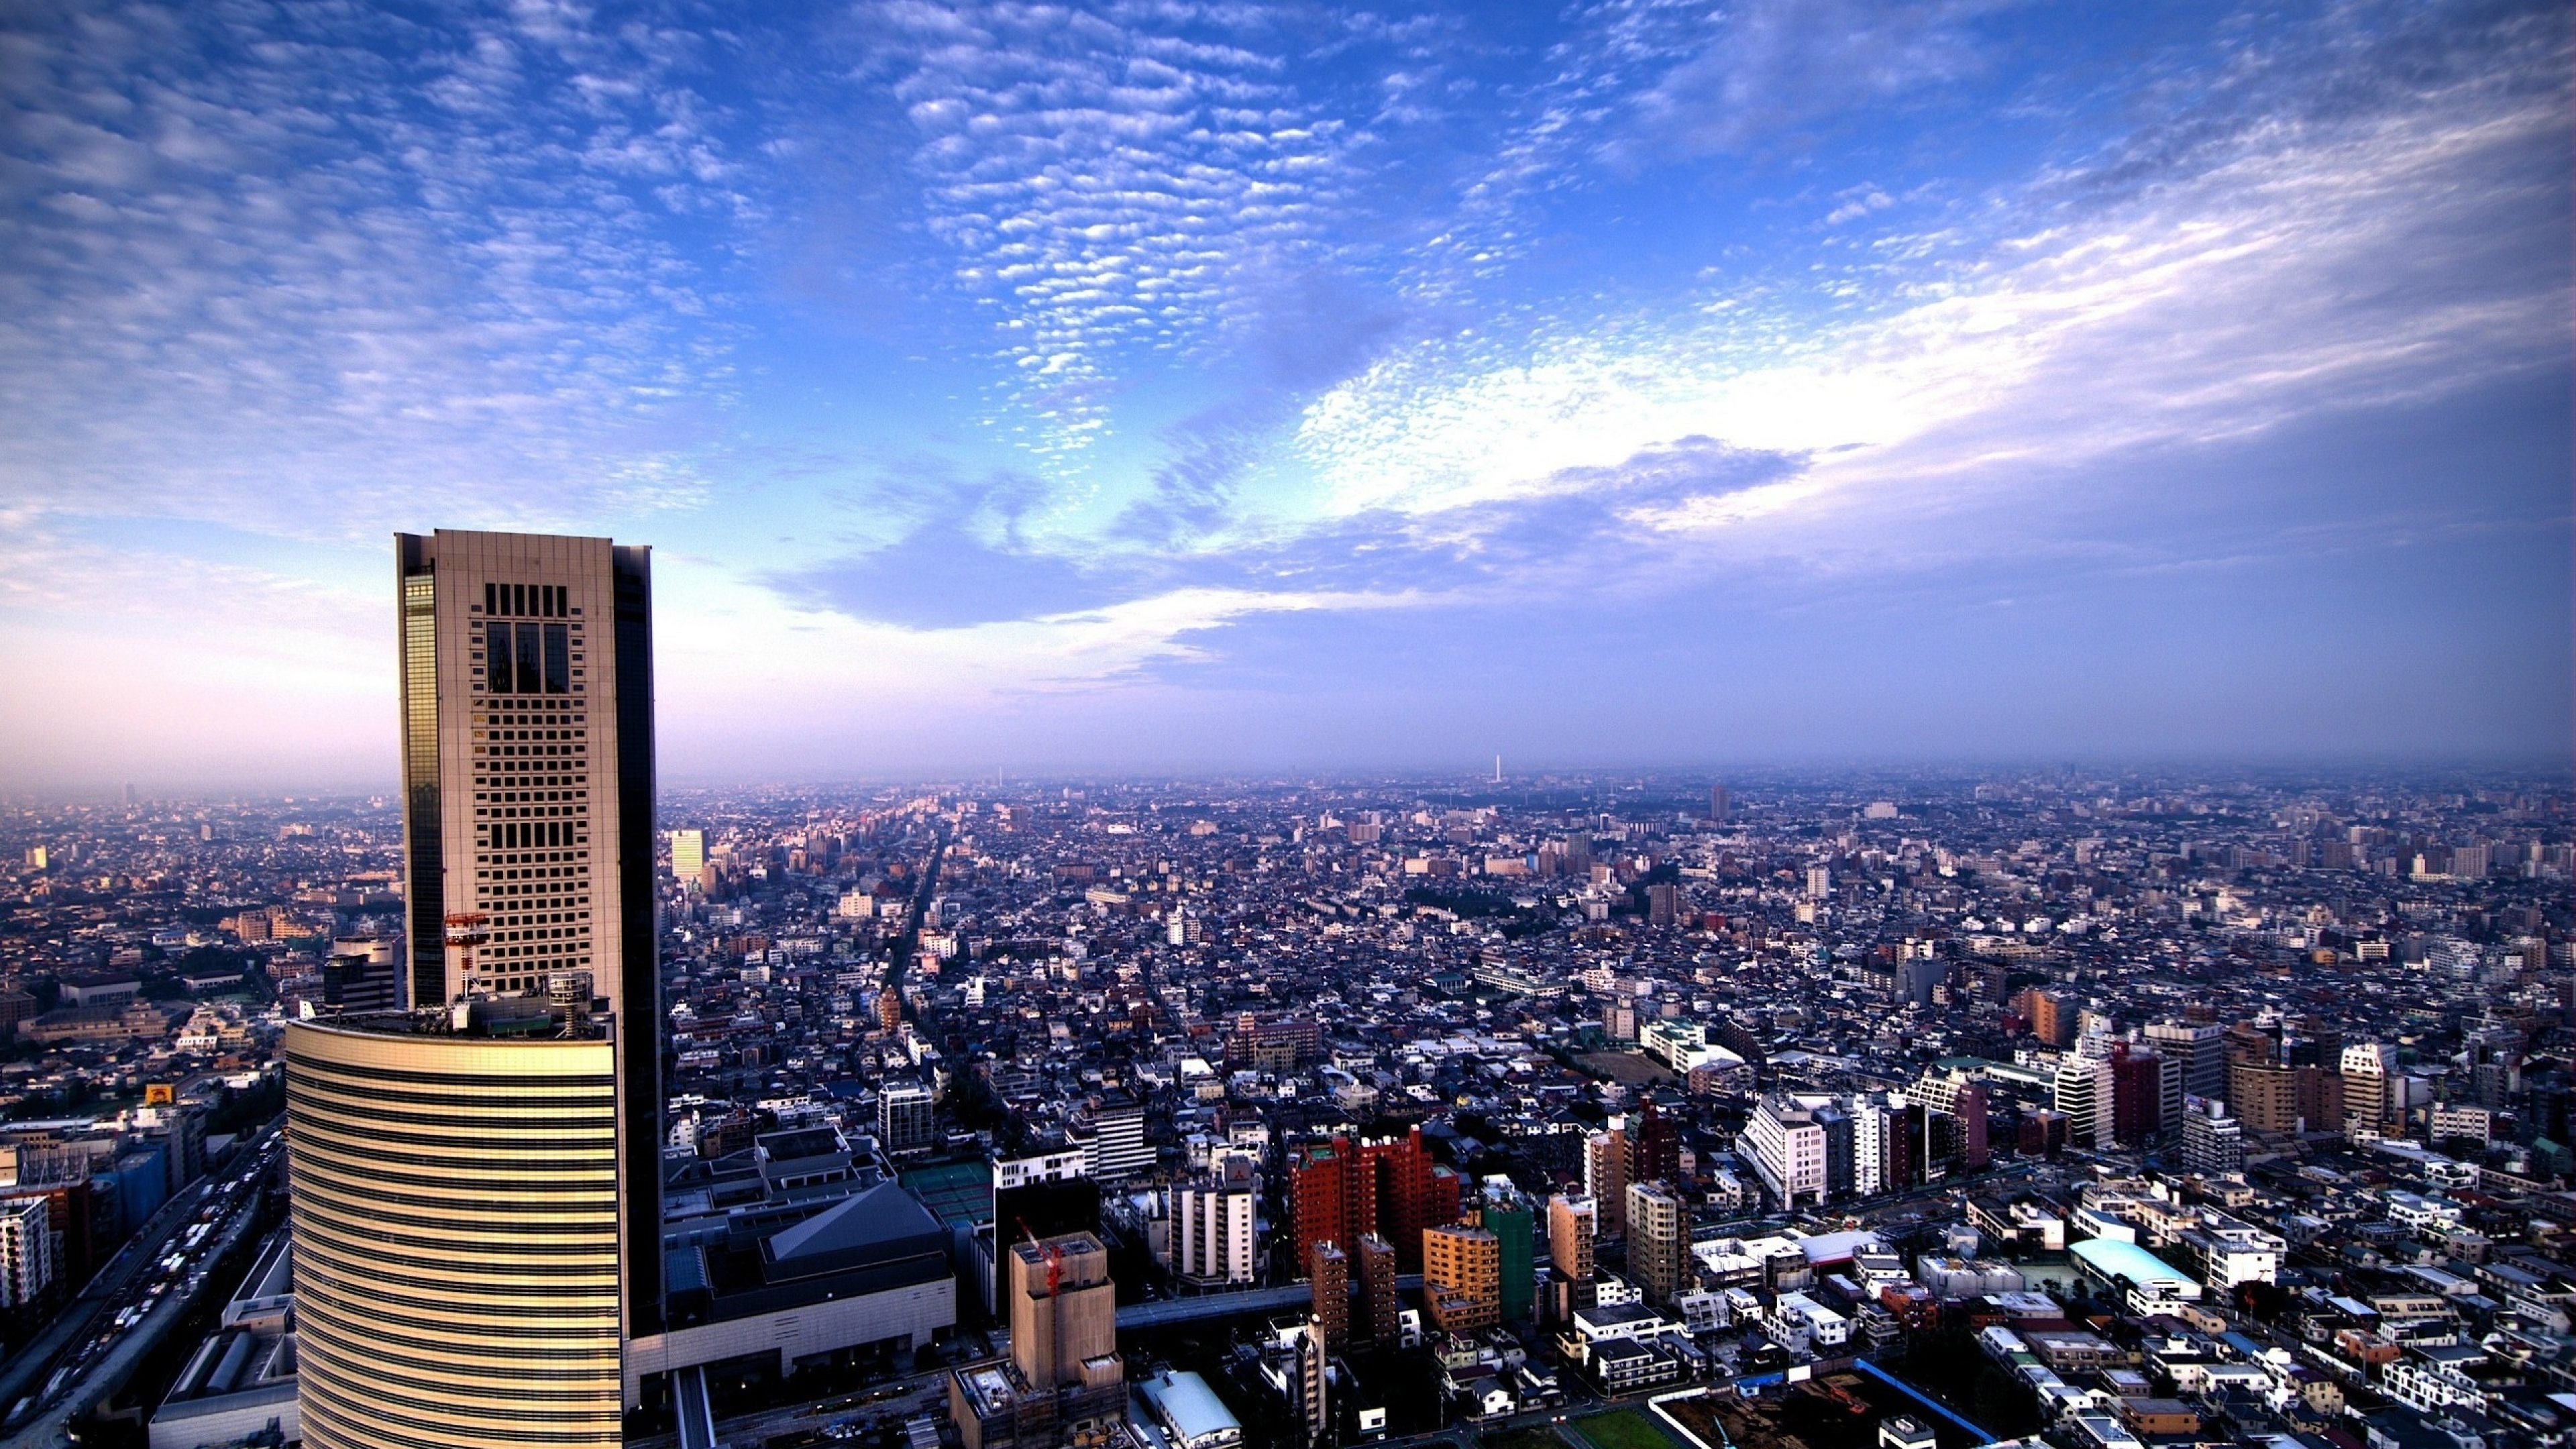 tokyo city aerial view 4k ultra HD wallpaper High quality walls